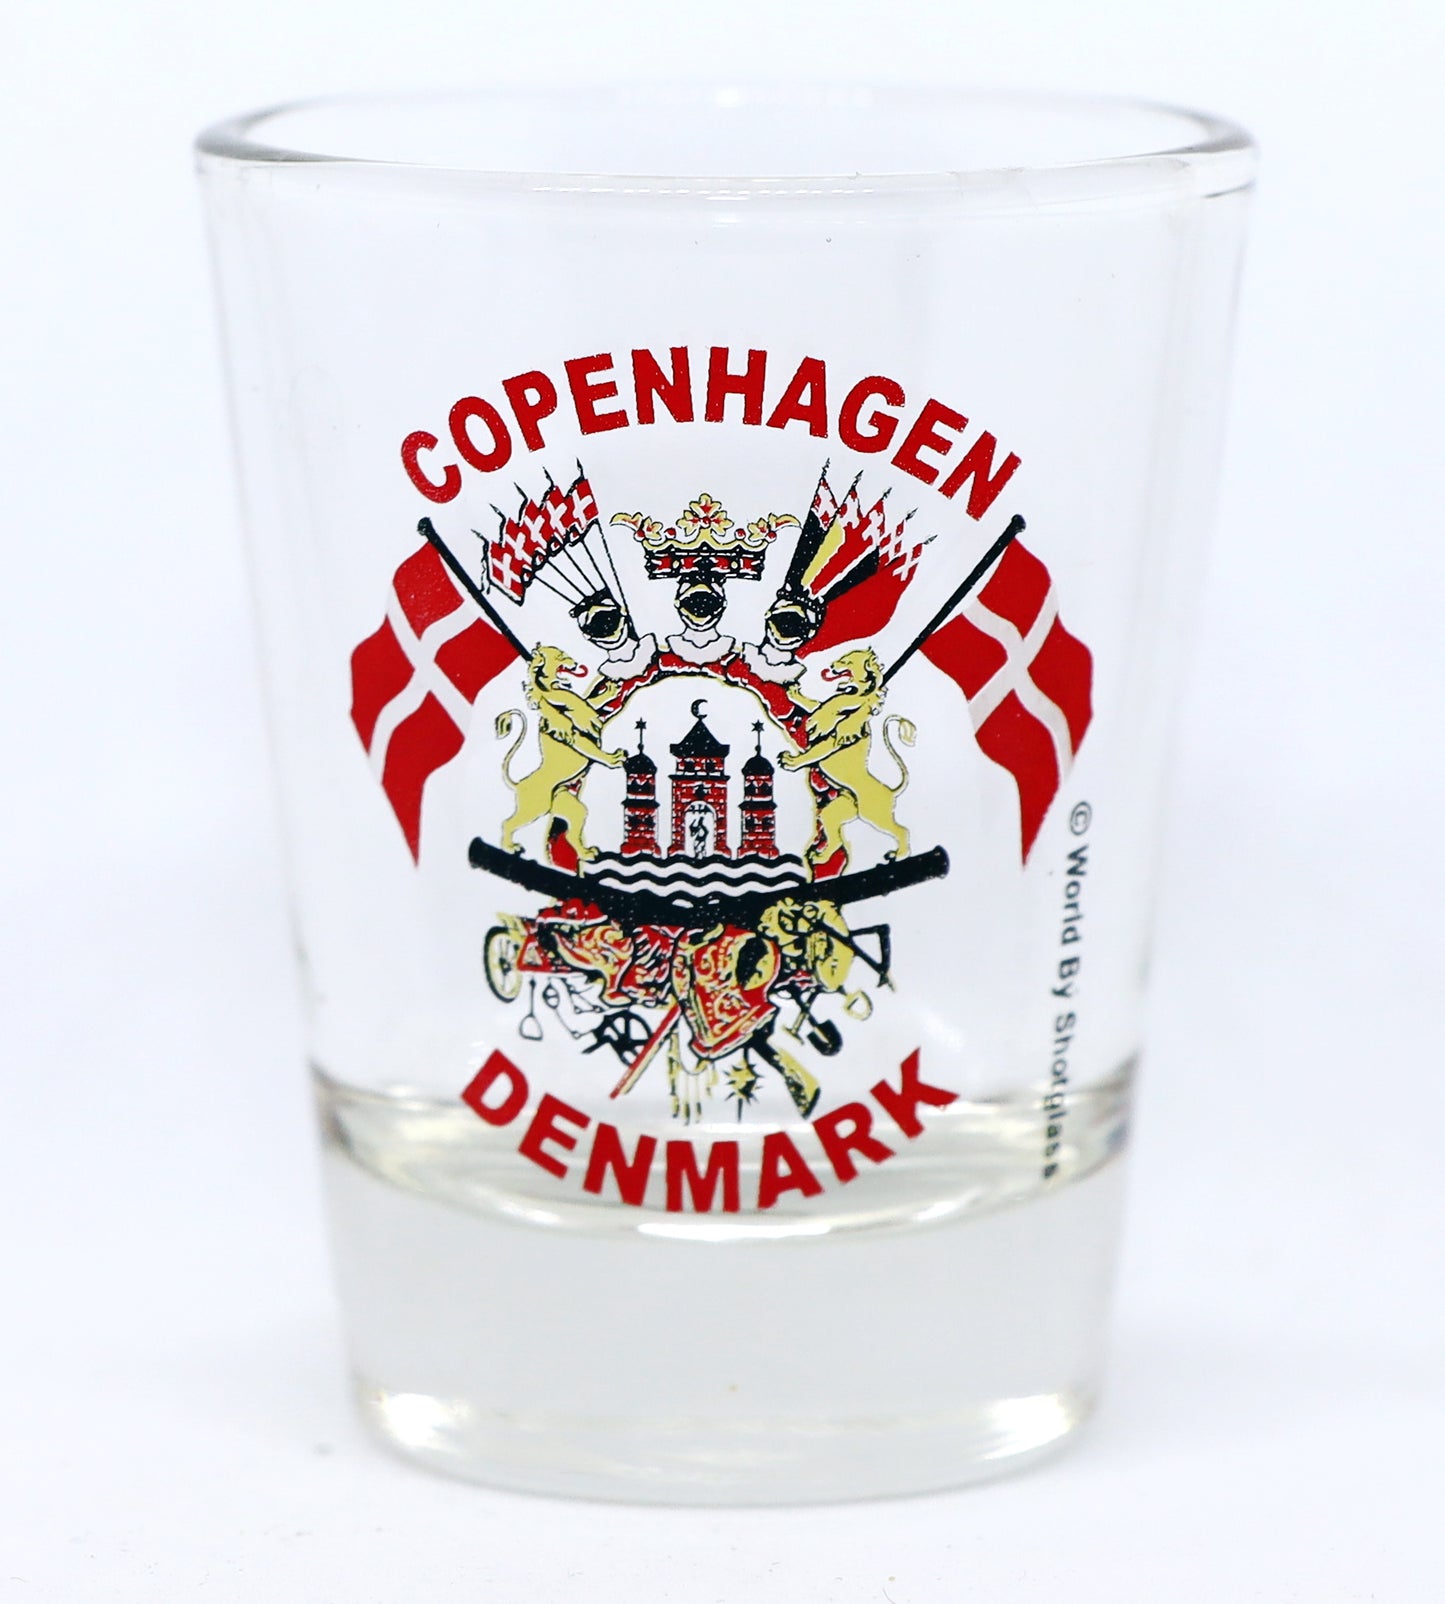 Copenhagen Denmark Flags and Coat of Arms Shot Glass